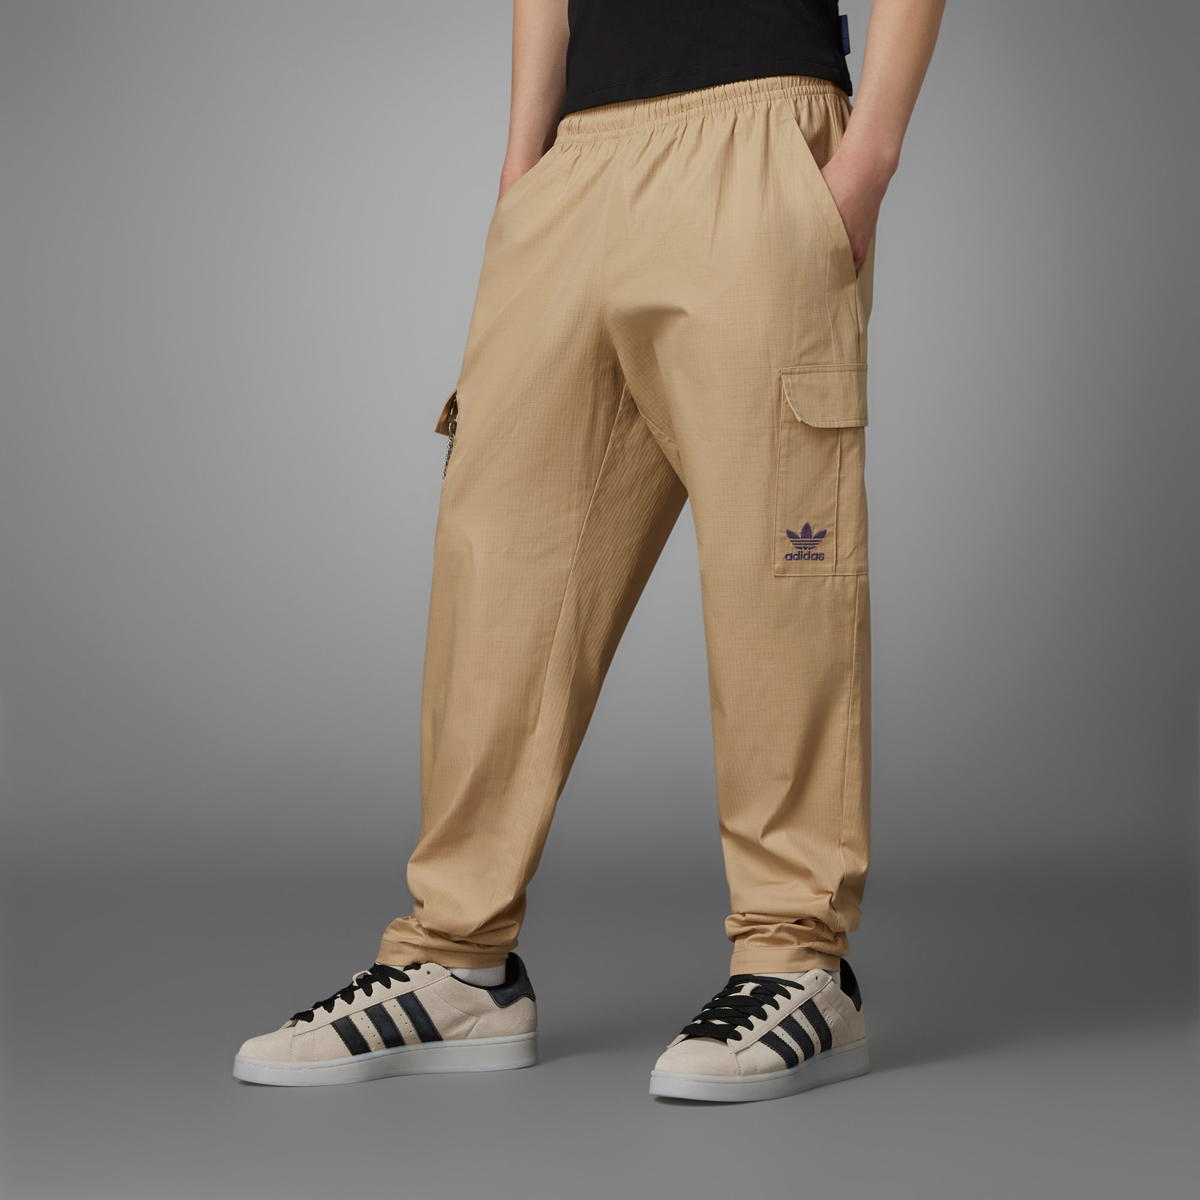 Yeezy Foam Runner Outfit Ideas For Men - Shorts Sweatpants Kanye